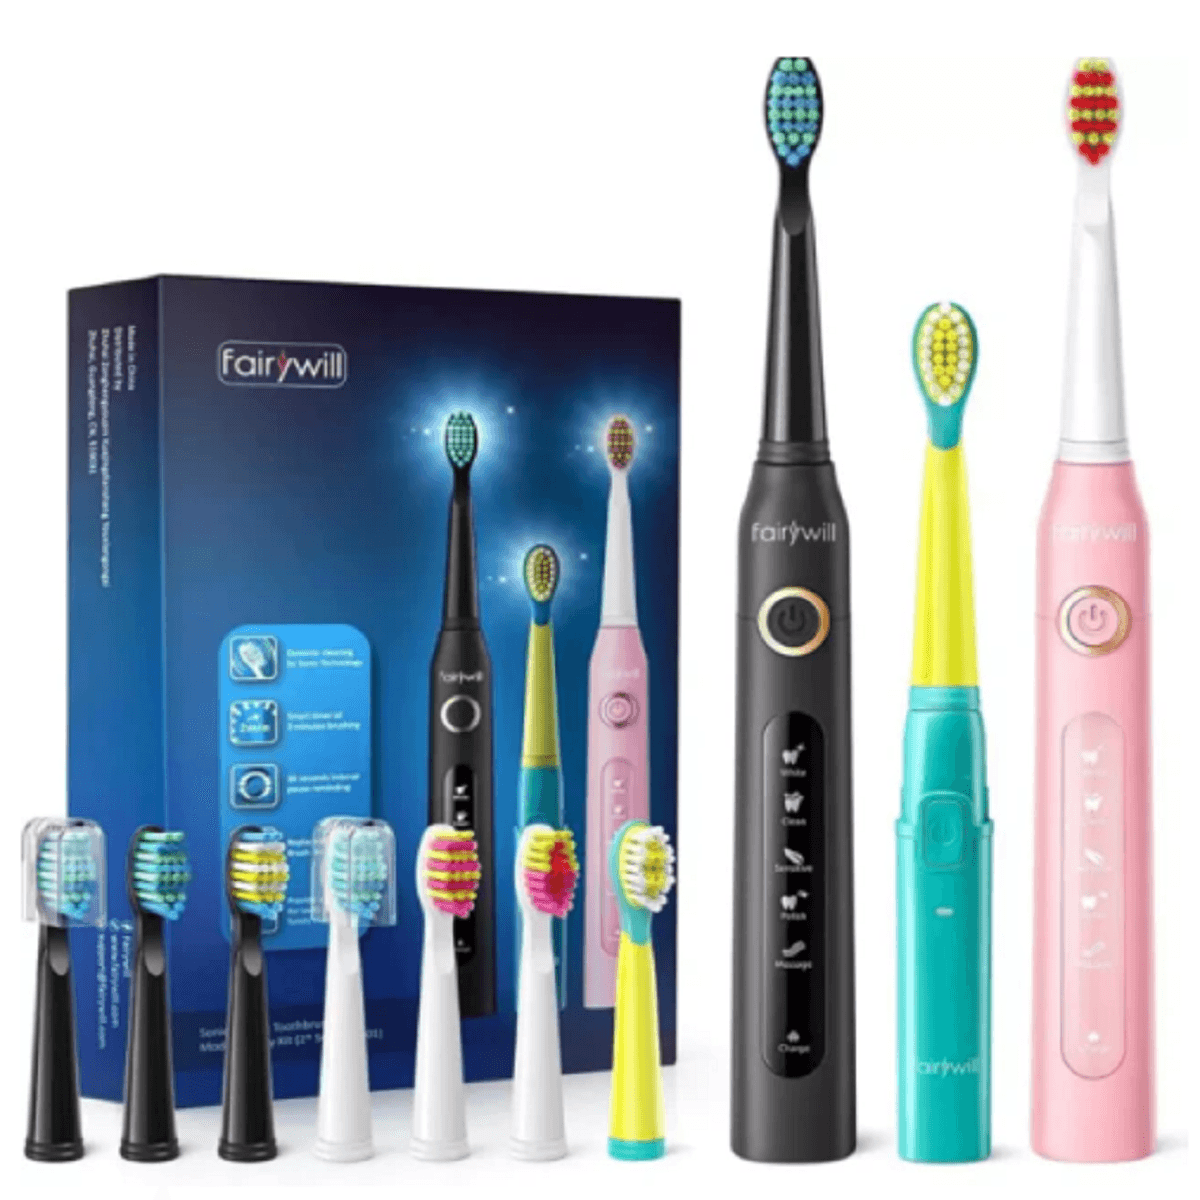 FairyWill D7 Sonic Electric Toothbrush Kit - USB Powered - dealskart.com.au